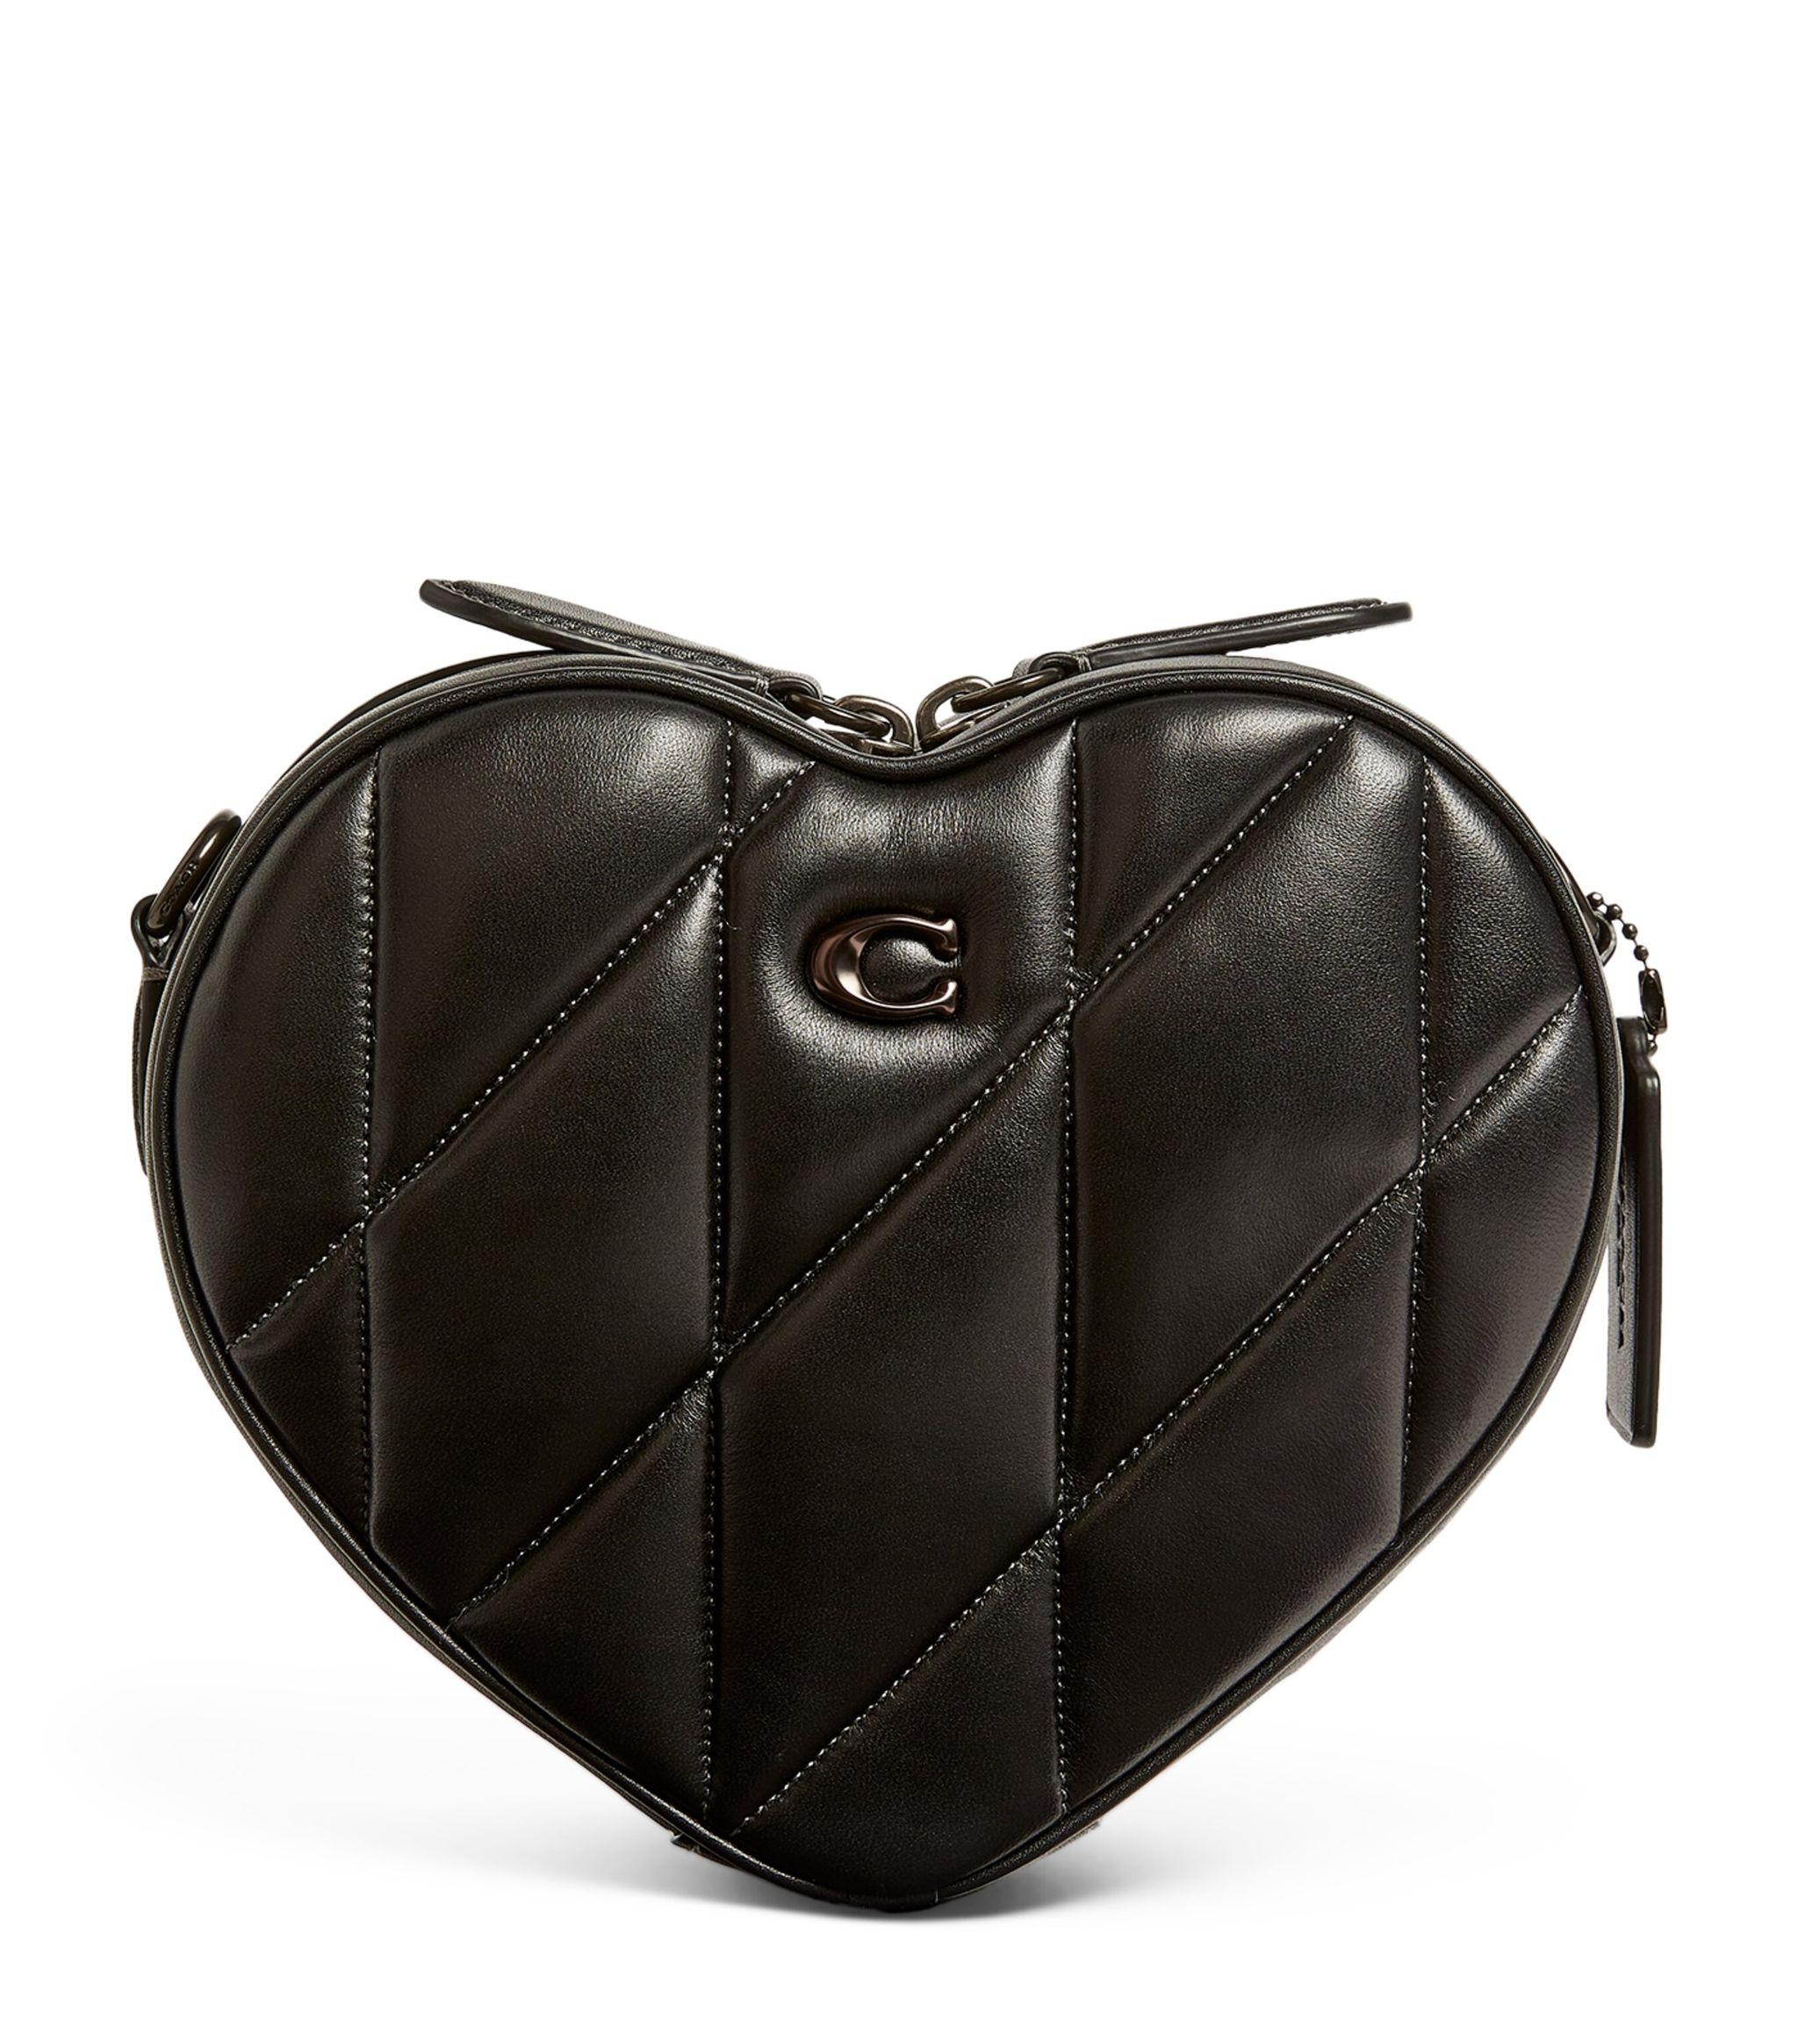 COACH Leather Heart Cross-body Bag in Black